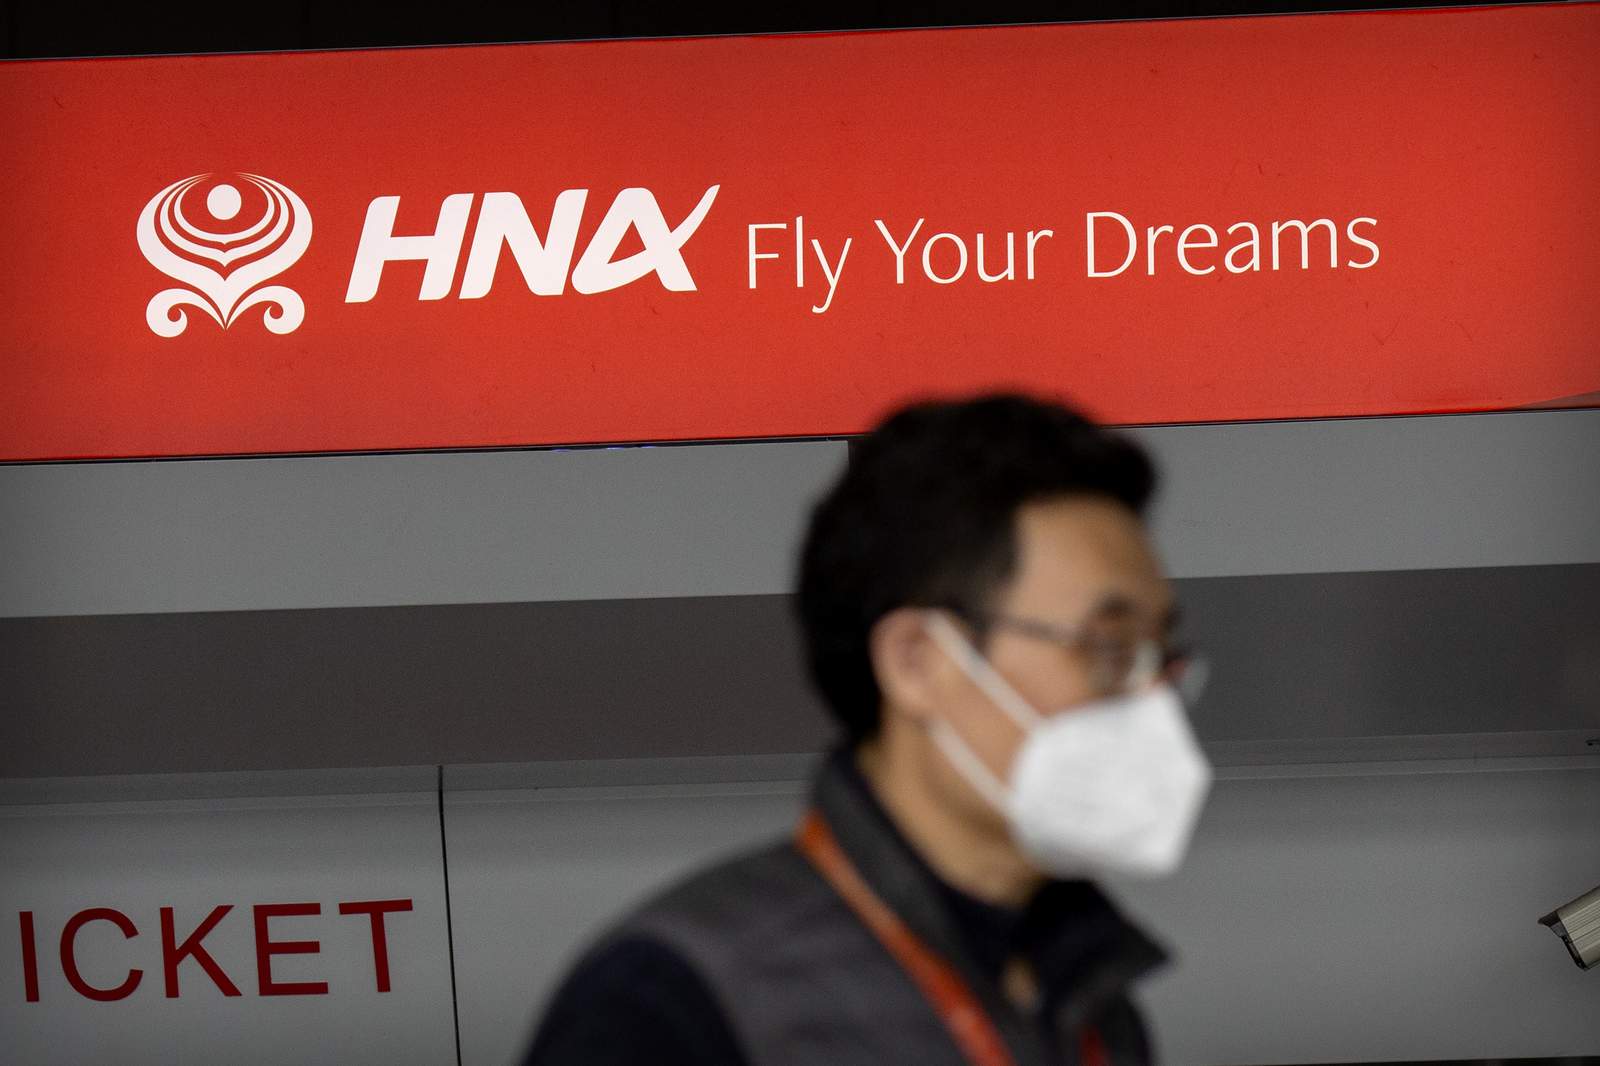 China's HNA Group says creditors want it declared bankrupt